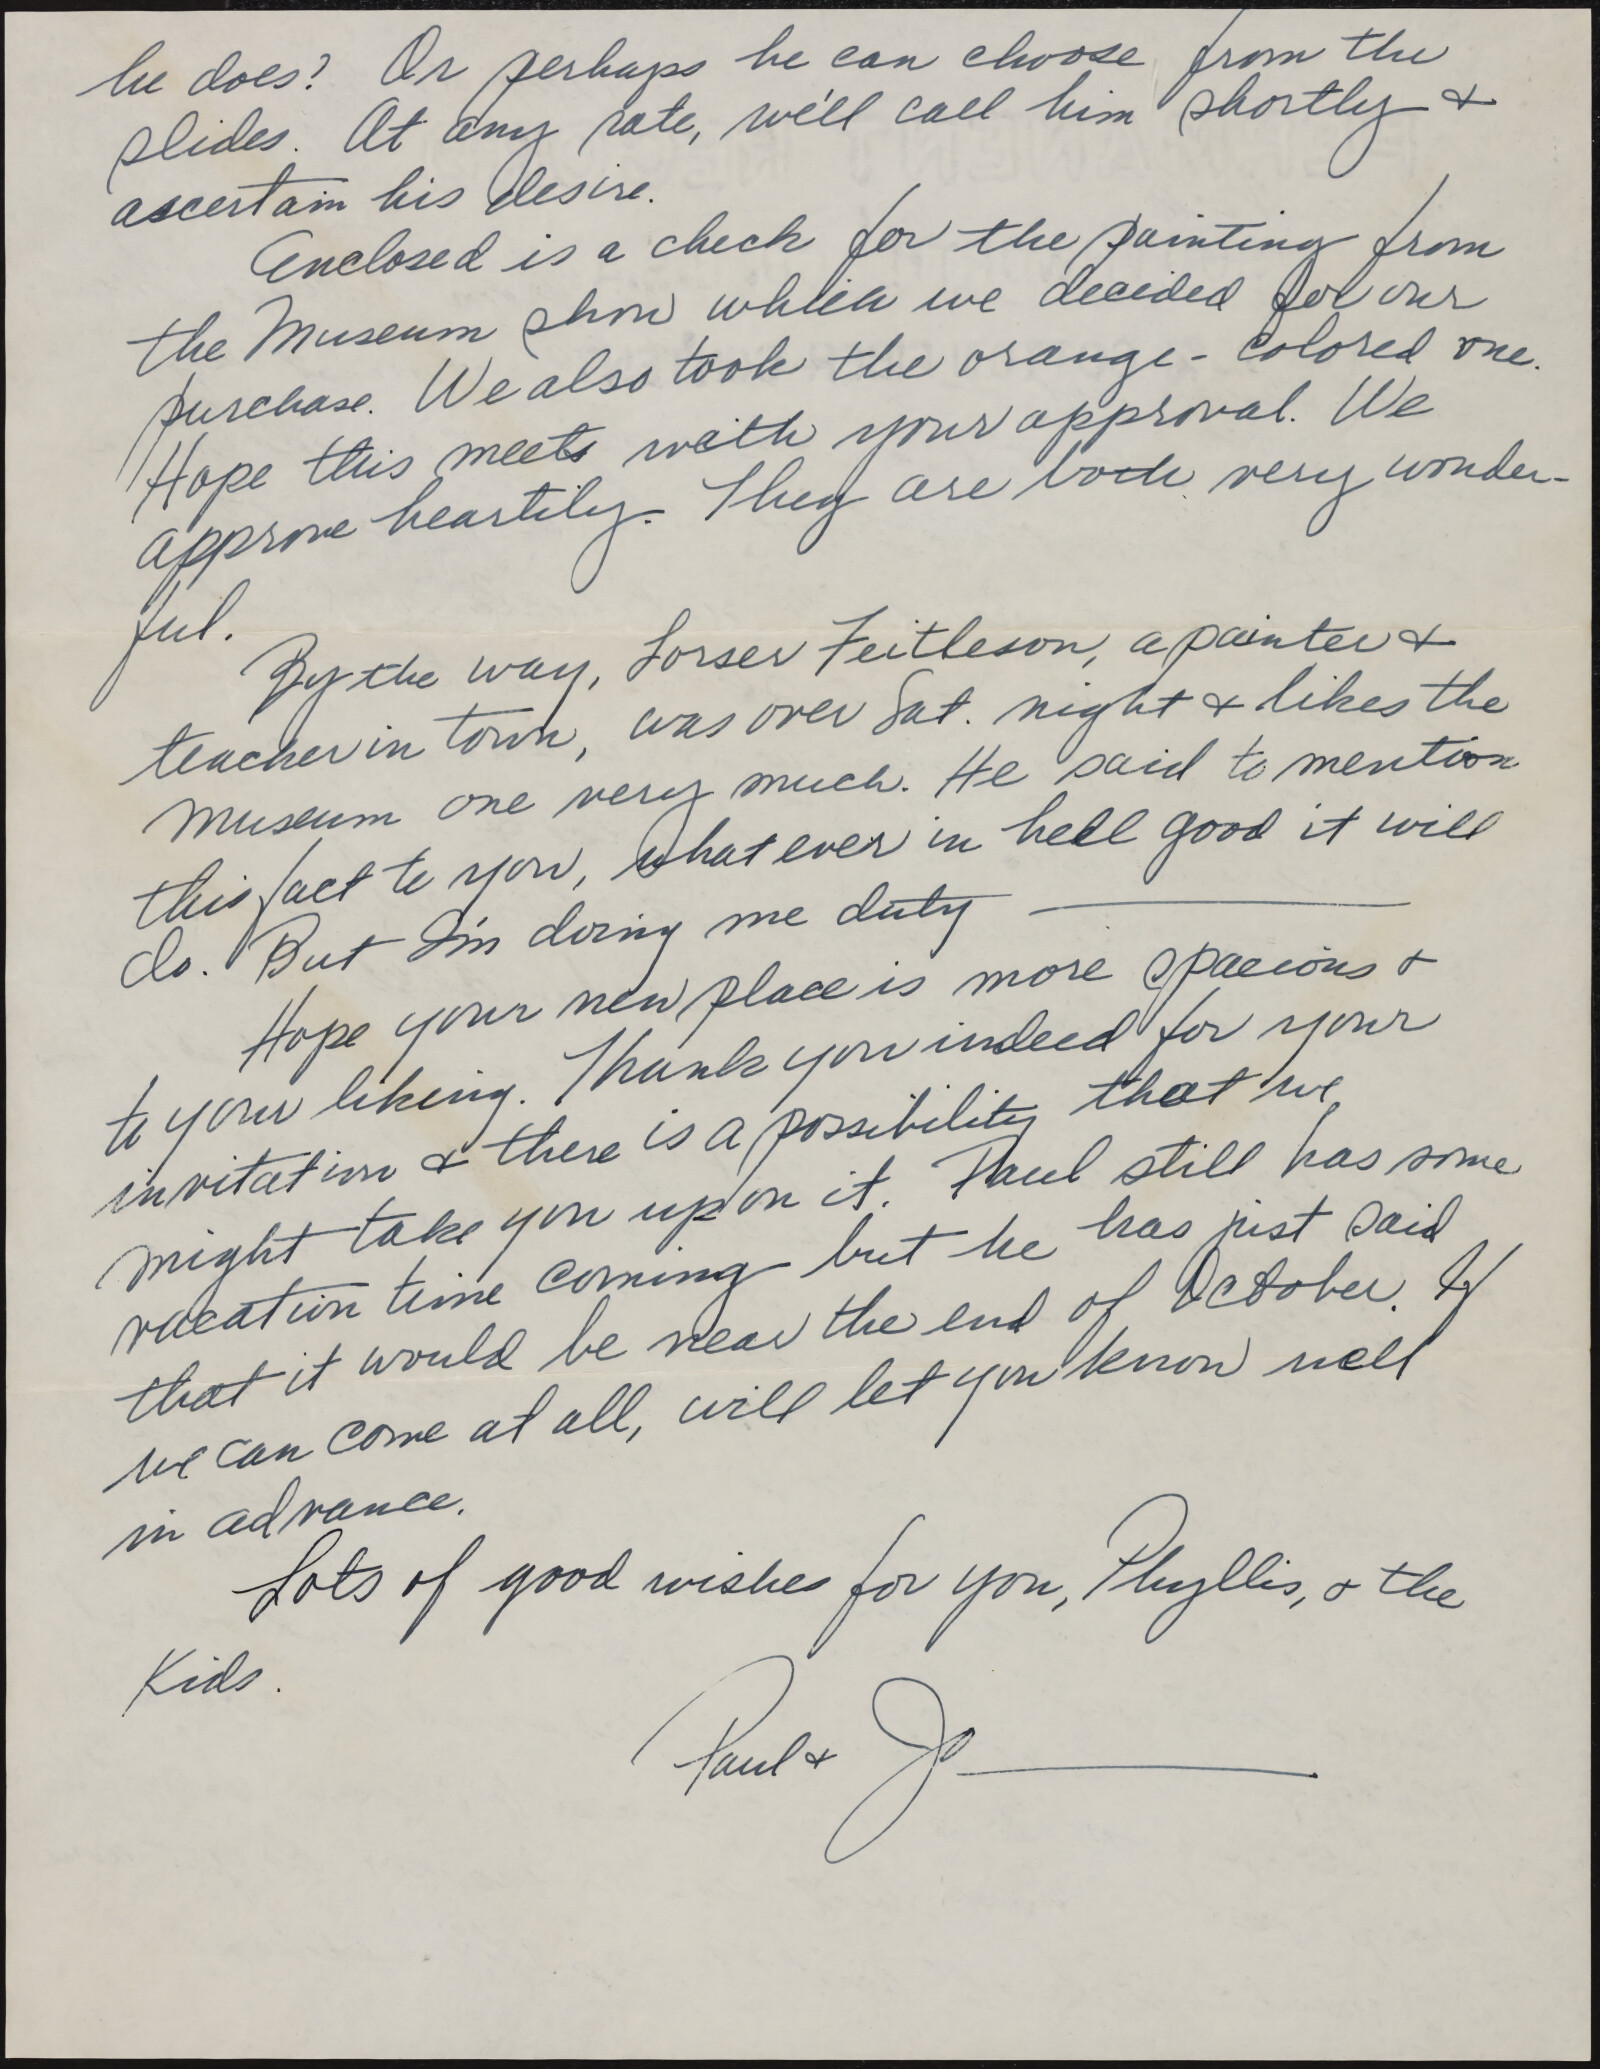 Correspondence from Josephine “Jo” Kantor (later Morris) and Paul Kantor to Richard Diebenkorn